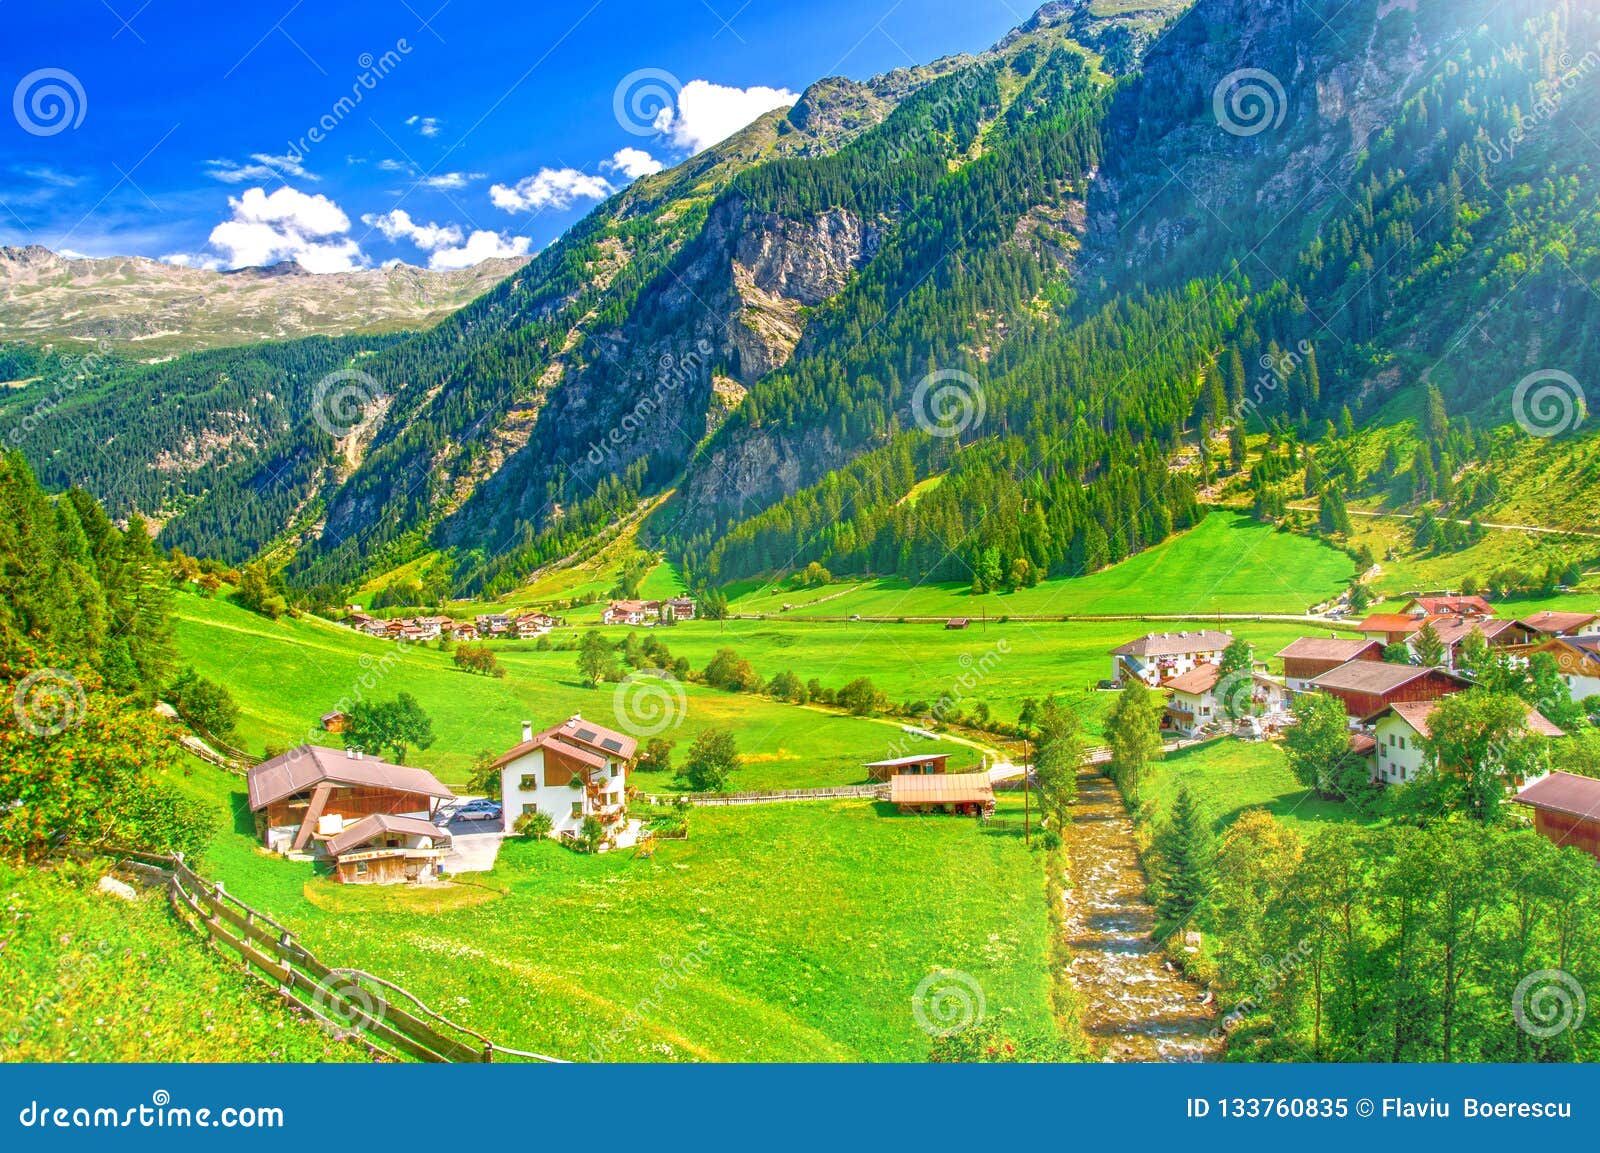 Feichten In Kaunertal Village Austria Stock Image Image Of Europe